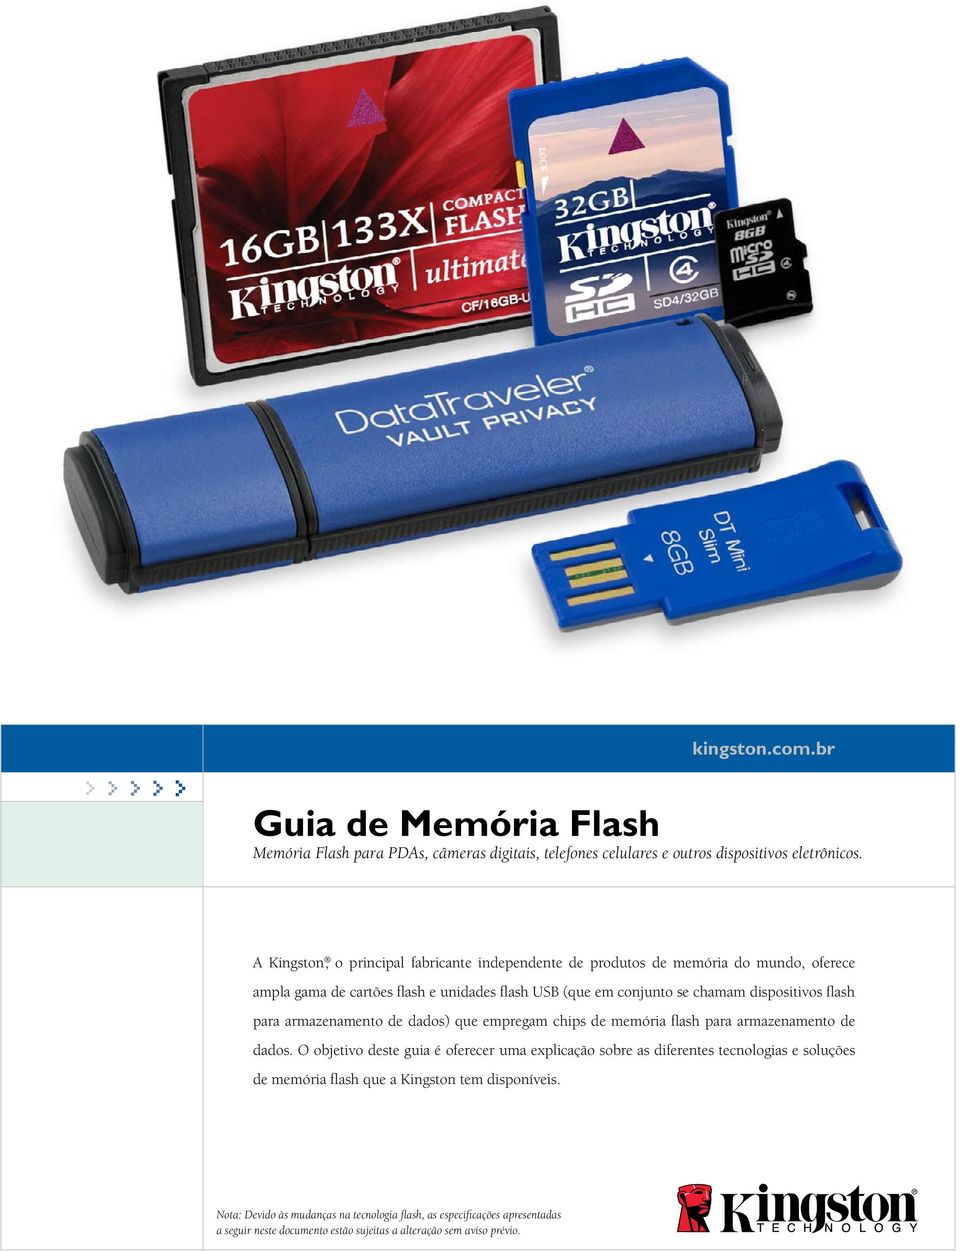 dispositivos flash para armazenamento de dados) que empregam chips de memória flash para armazenamento de dados.